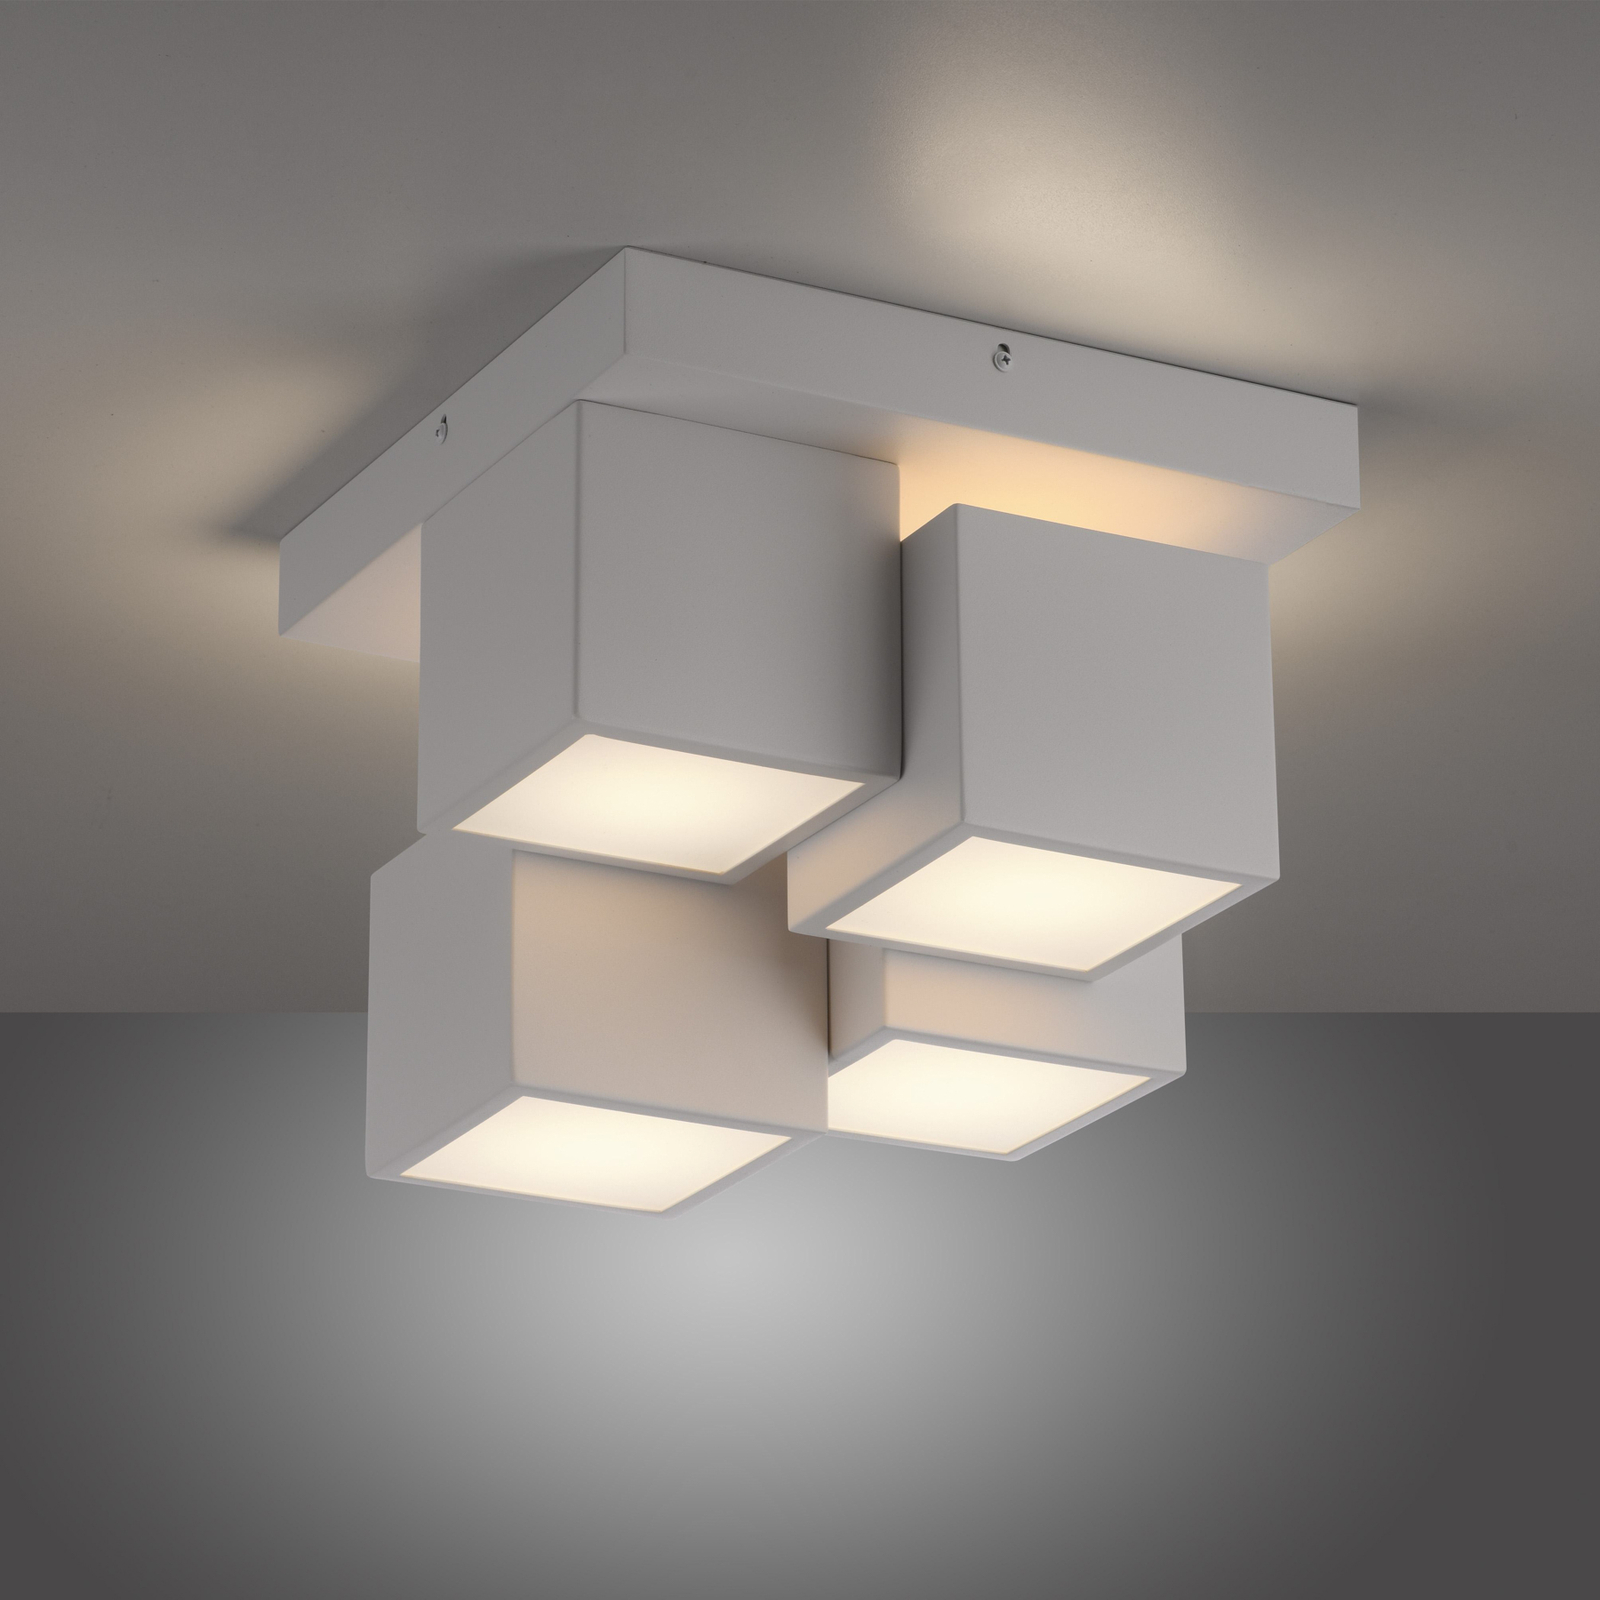 JUST LIGHT. Lampa sufitowa LED Tetris, żelazo, 3000 K, biały